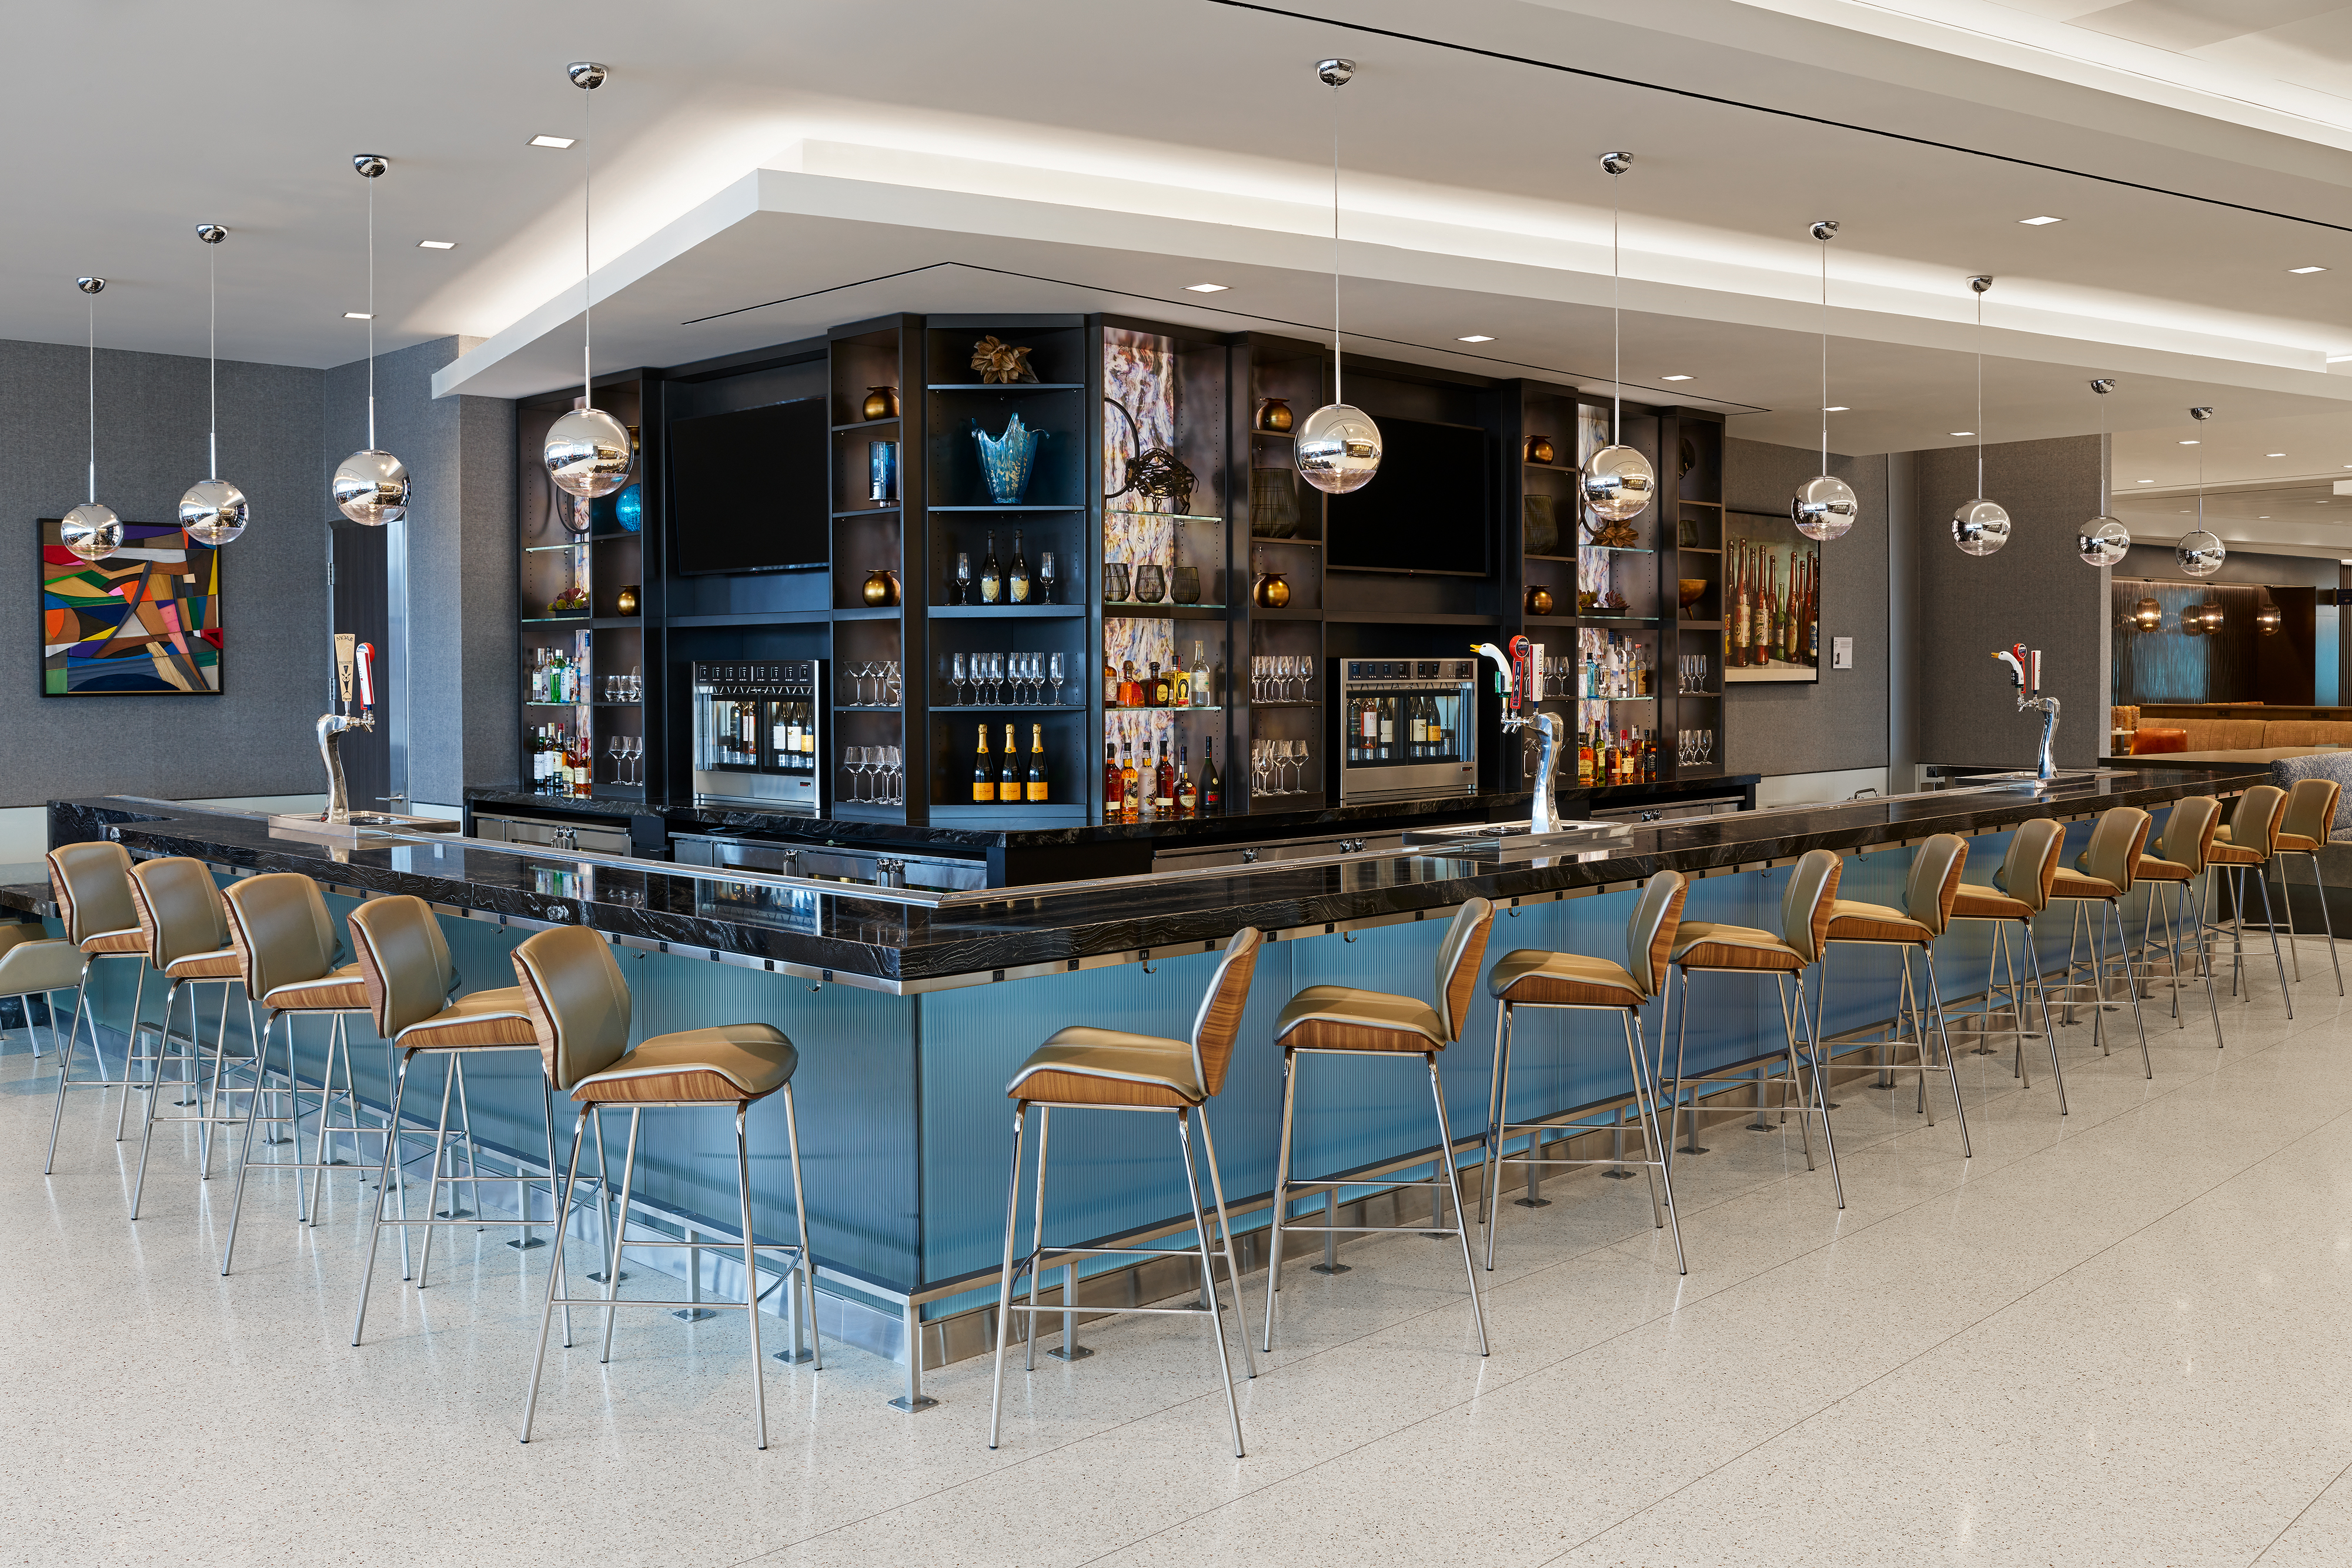 Delta Sky Club full-service bar at new SLC airport